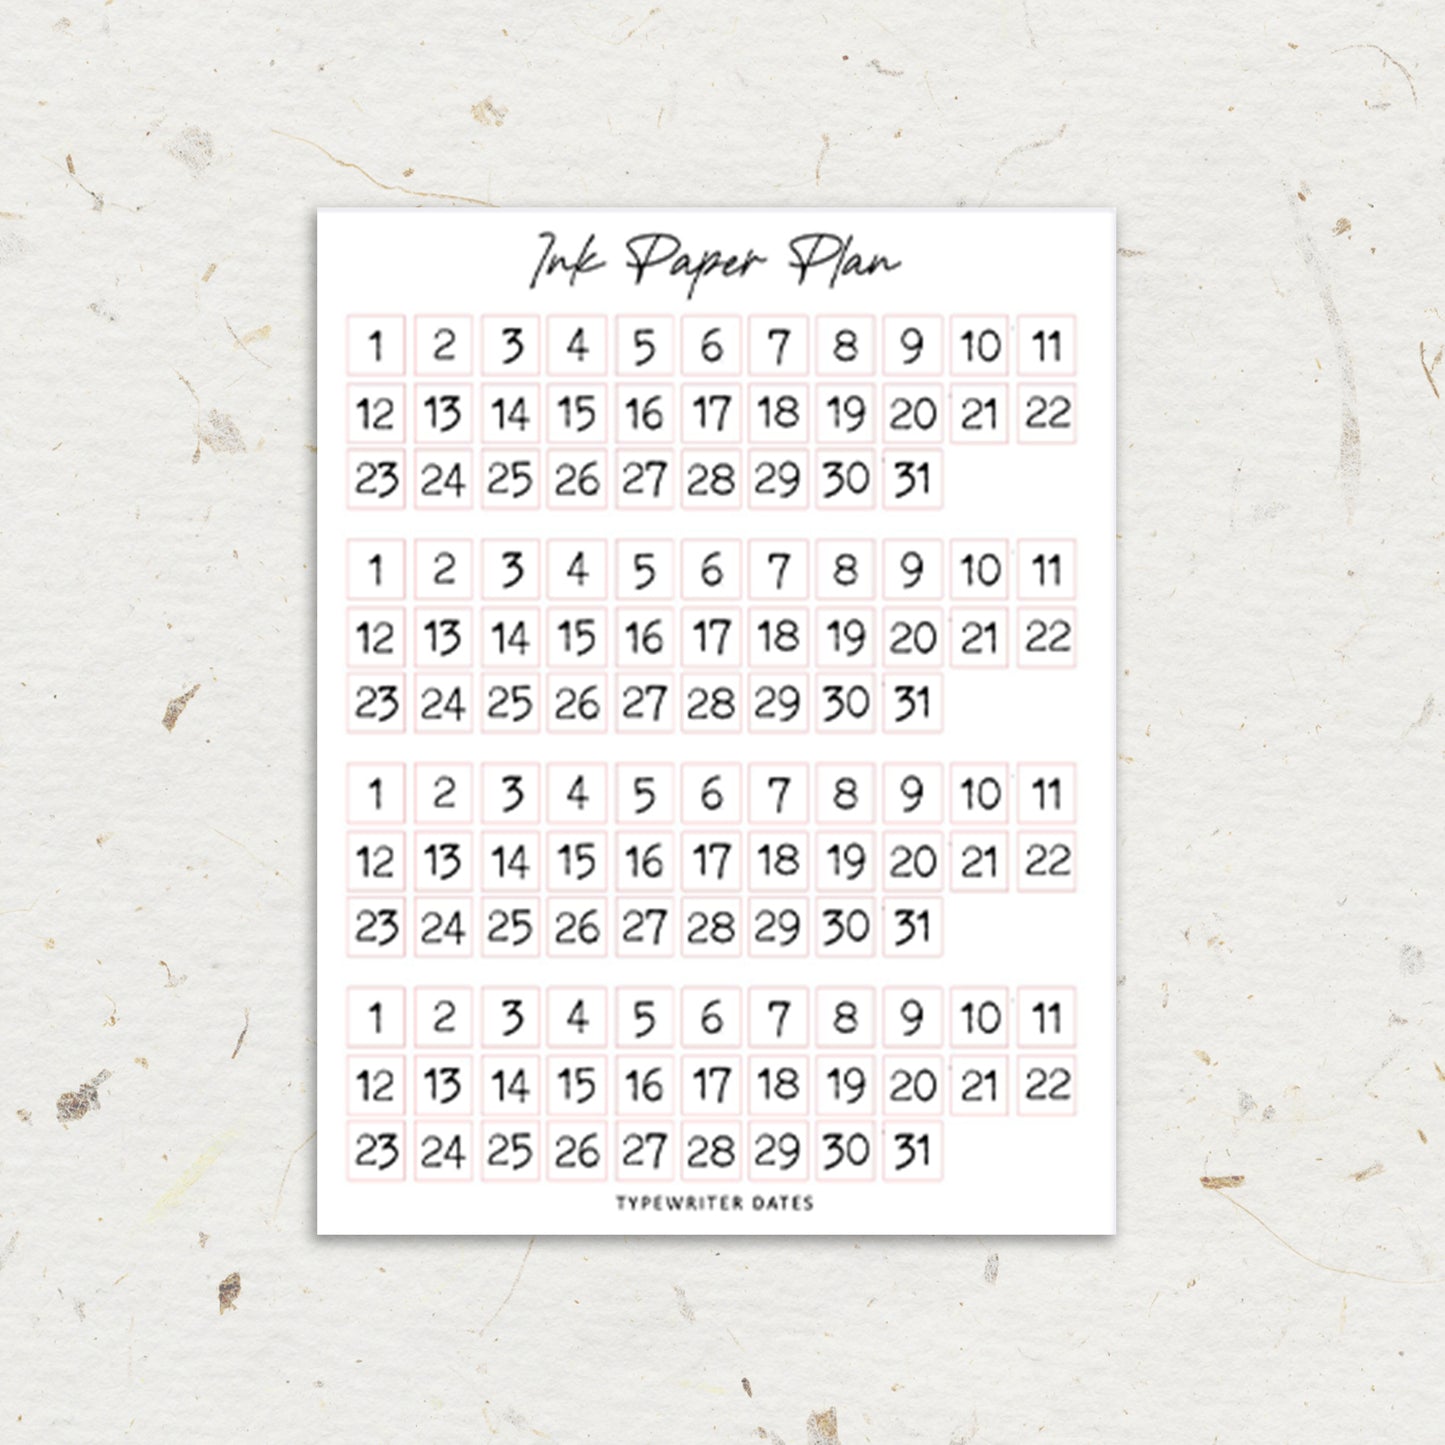 Typewriter Dates | Foiled Script